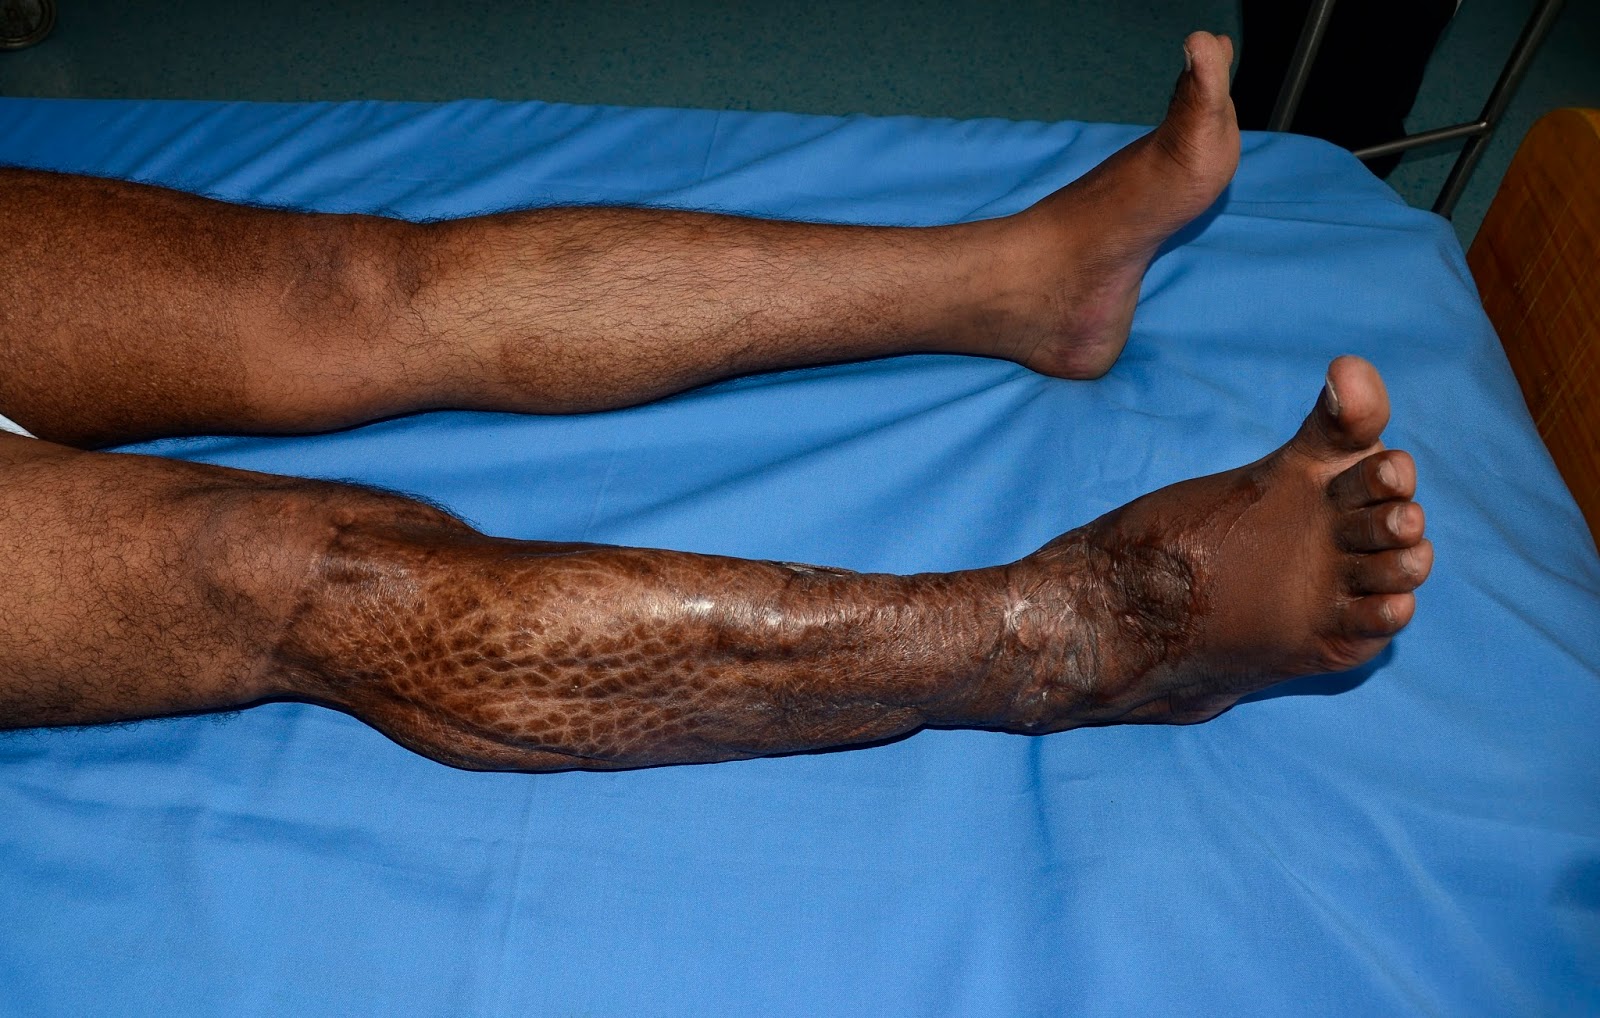 Crush Injury Foot Lower Limb Injuries And Limb Salvage Major